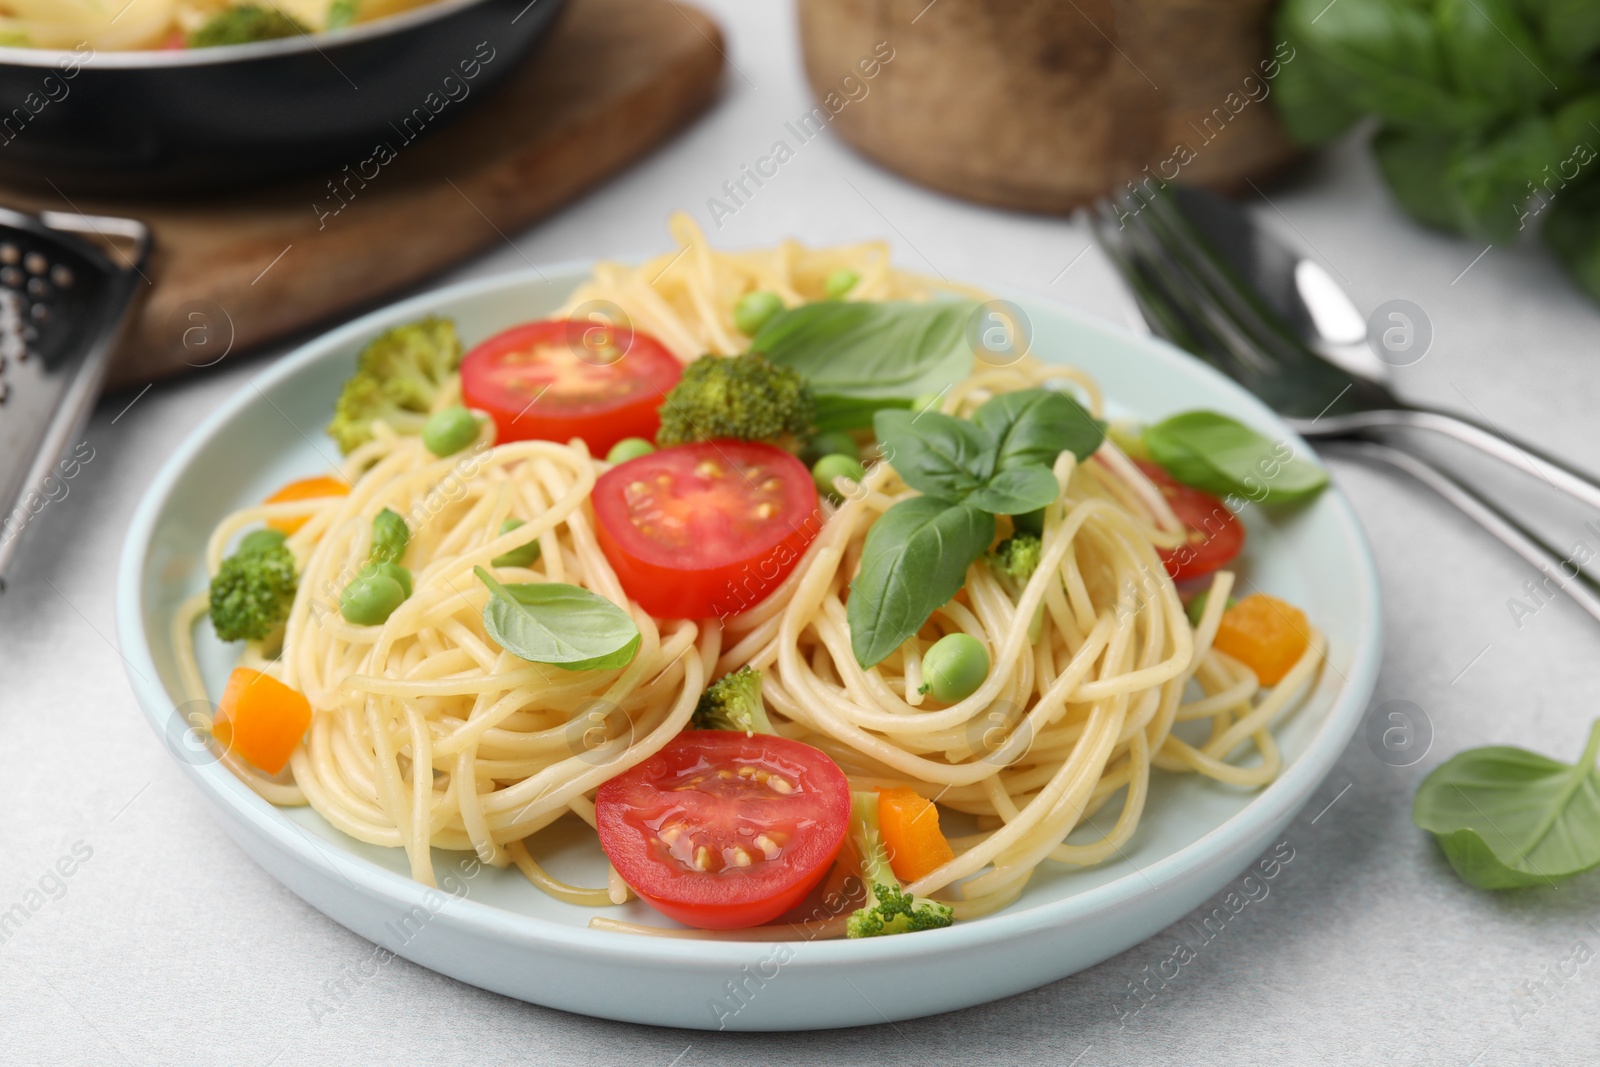 Photo of Delicious pasta primavera and cutlery on light gray table, closeup